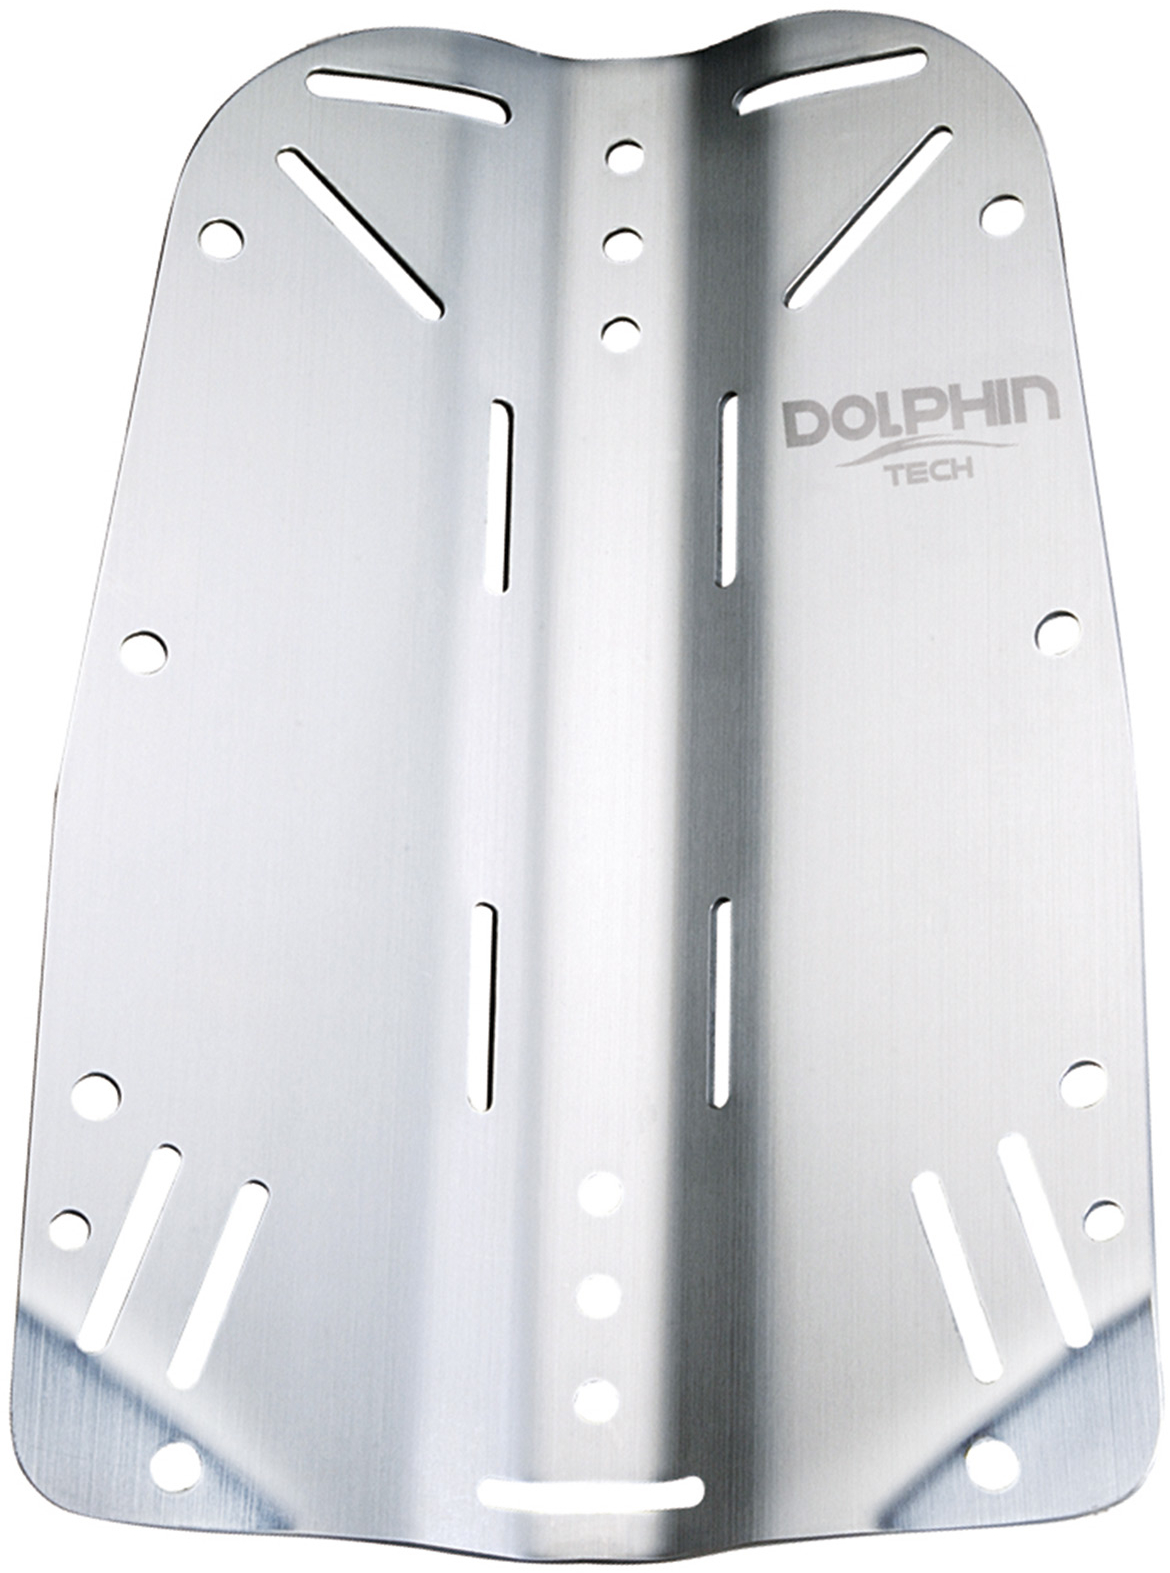 Dolphin Tech BP-4 Aluminum Back Plate